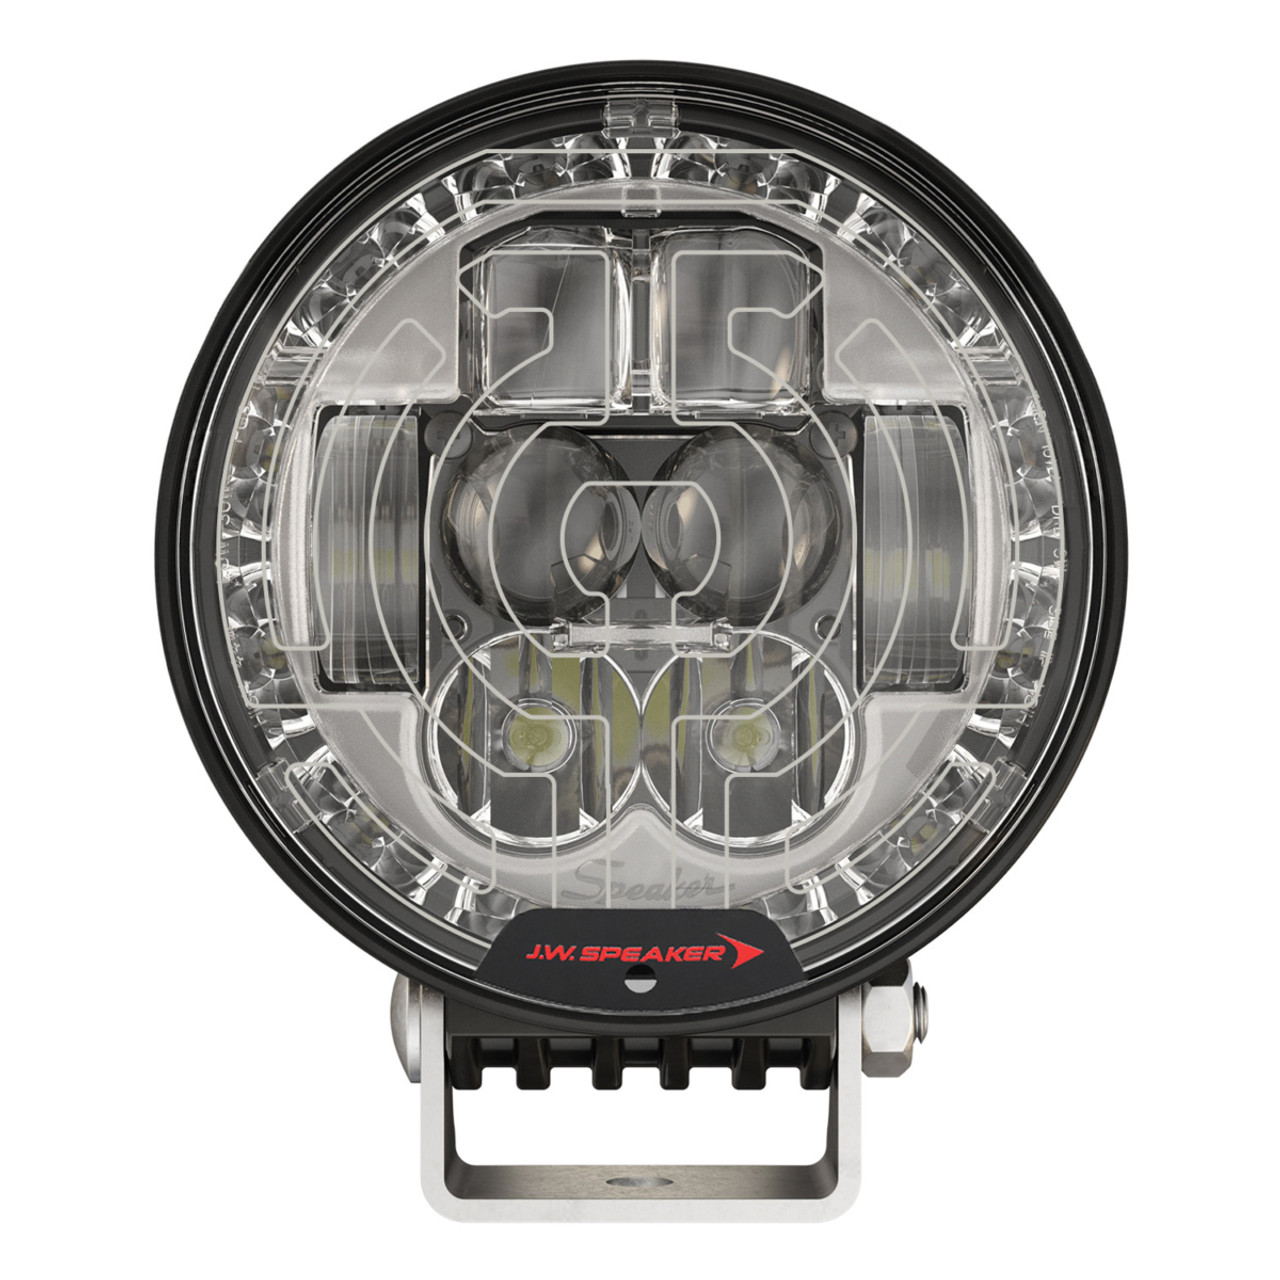 NEW LED Headlight – Model 8633 Evolution 5.75" Round LED Headlights with Pedestal Mount